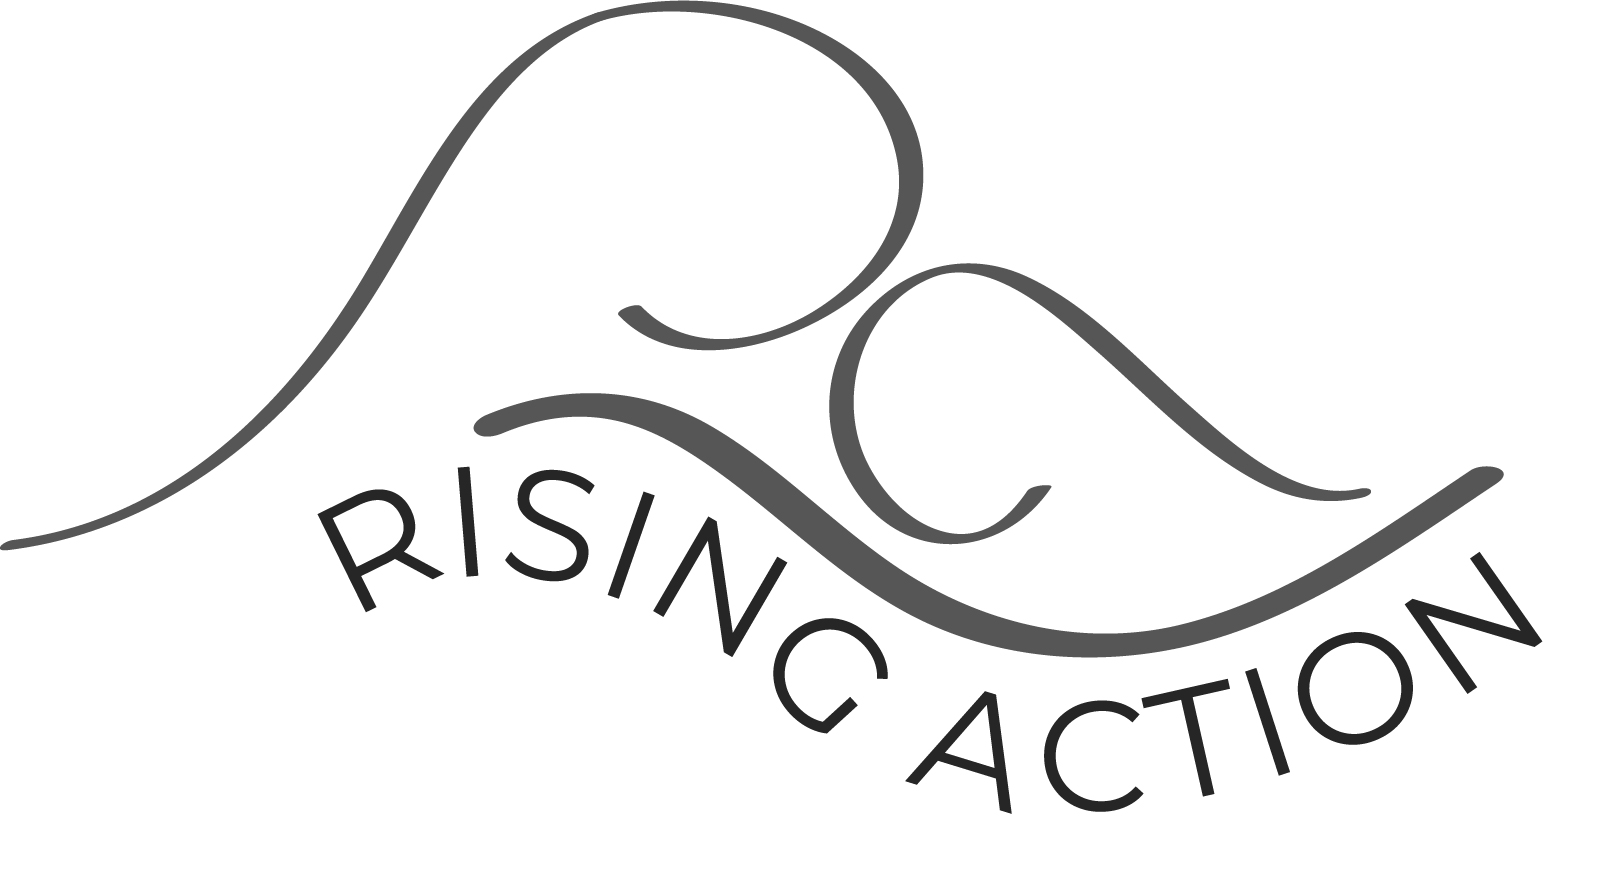 Rising Action